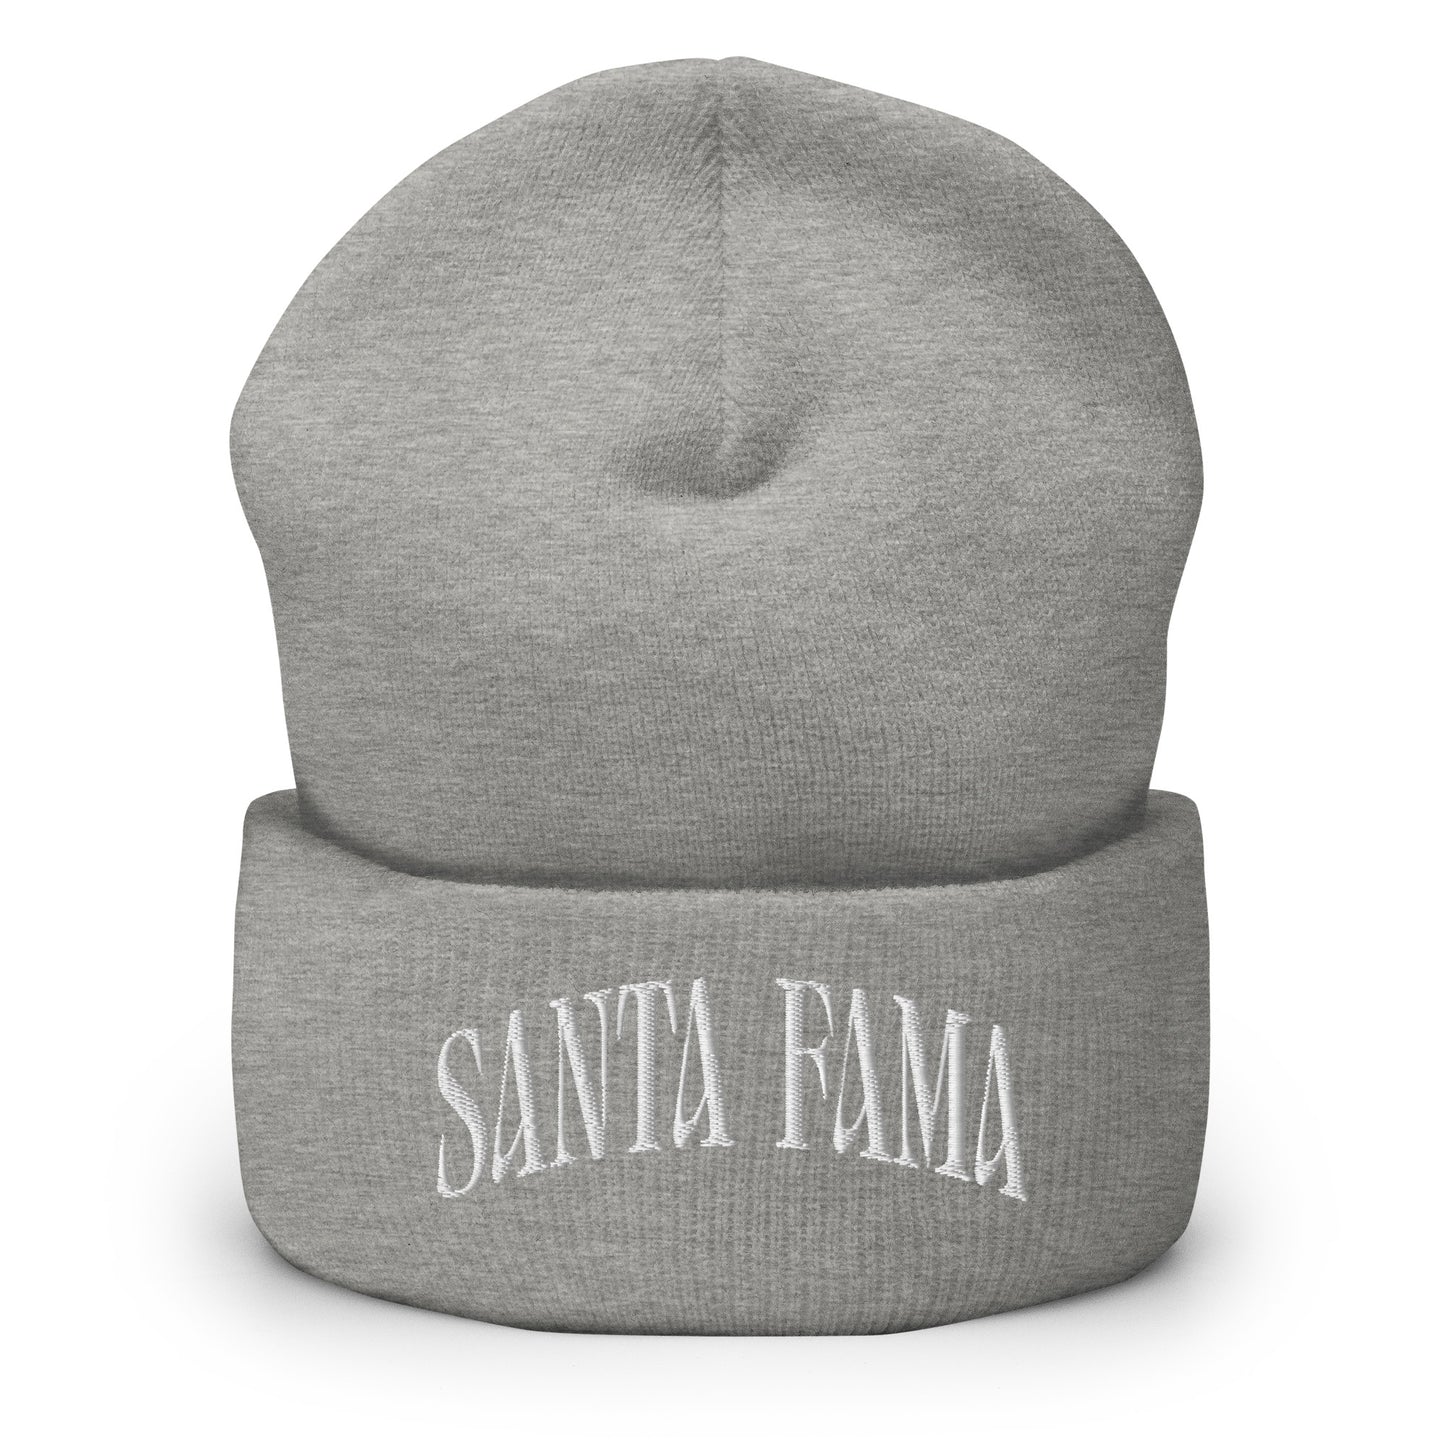 No Fame - Santa Fama Beanie